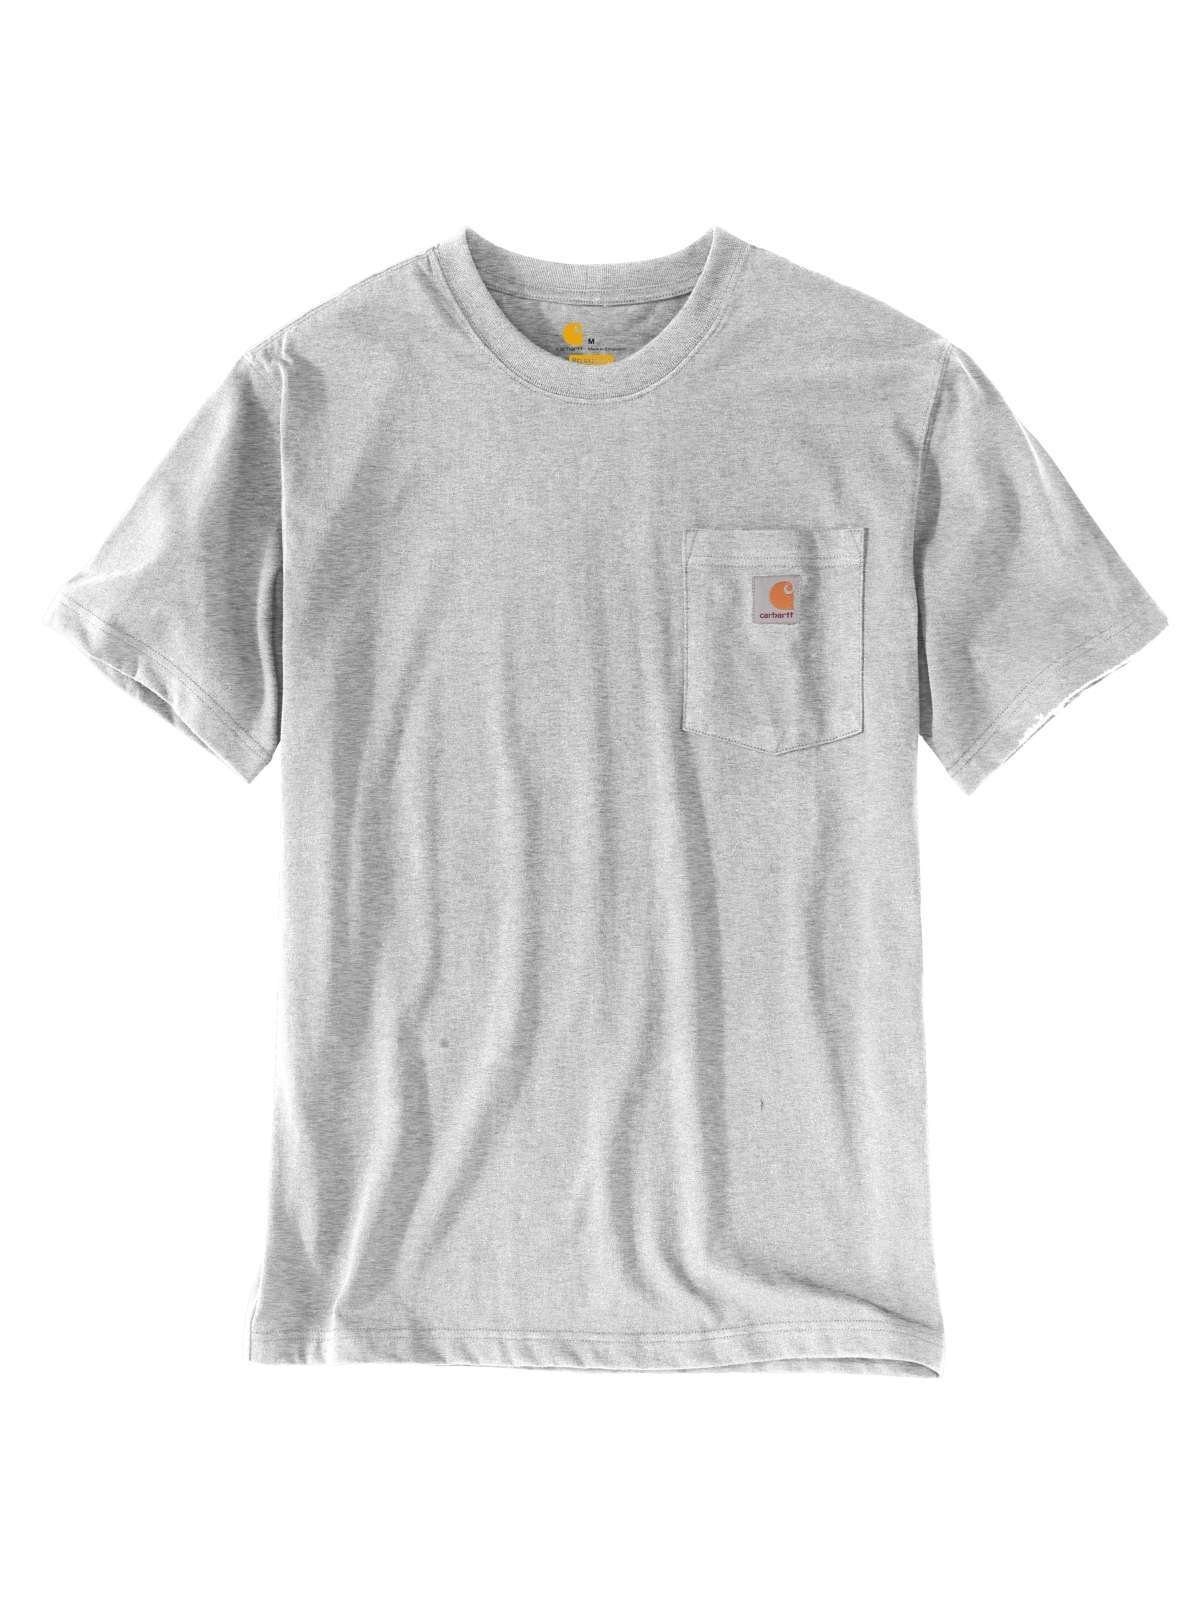 Carhartt HEATHER Carhartt T-Shirt GREY T-Shirt grau